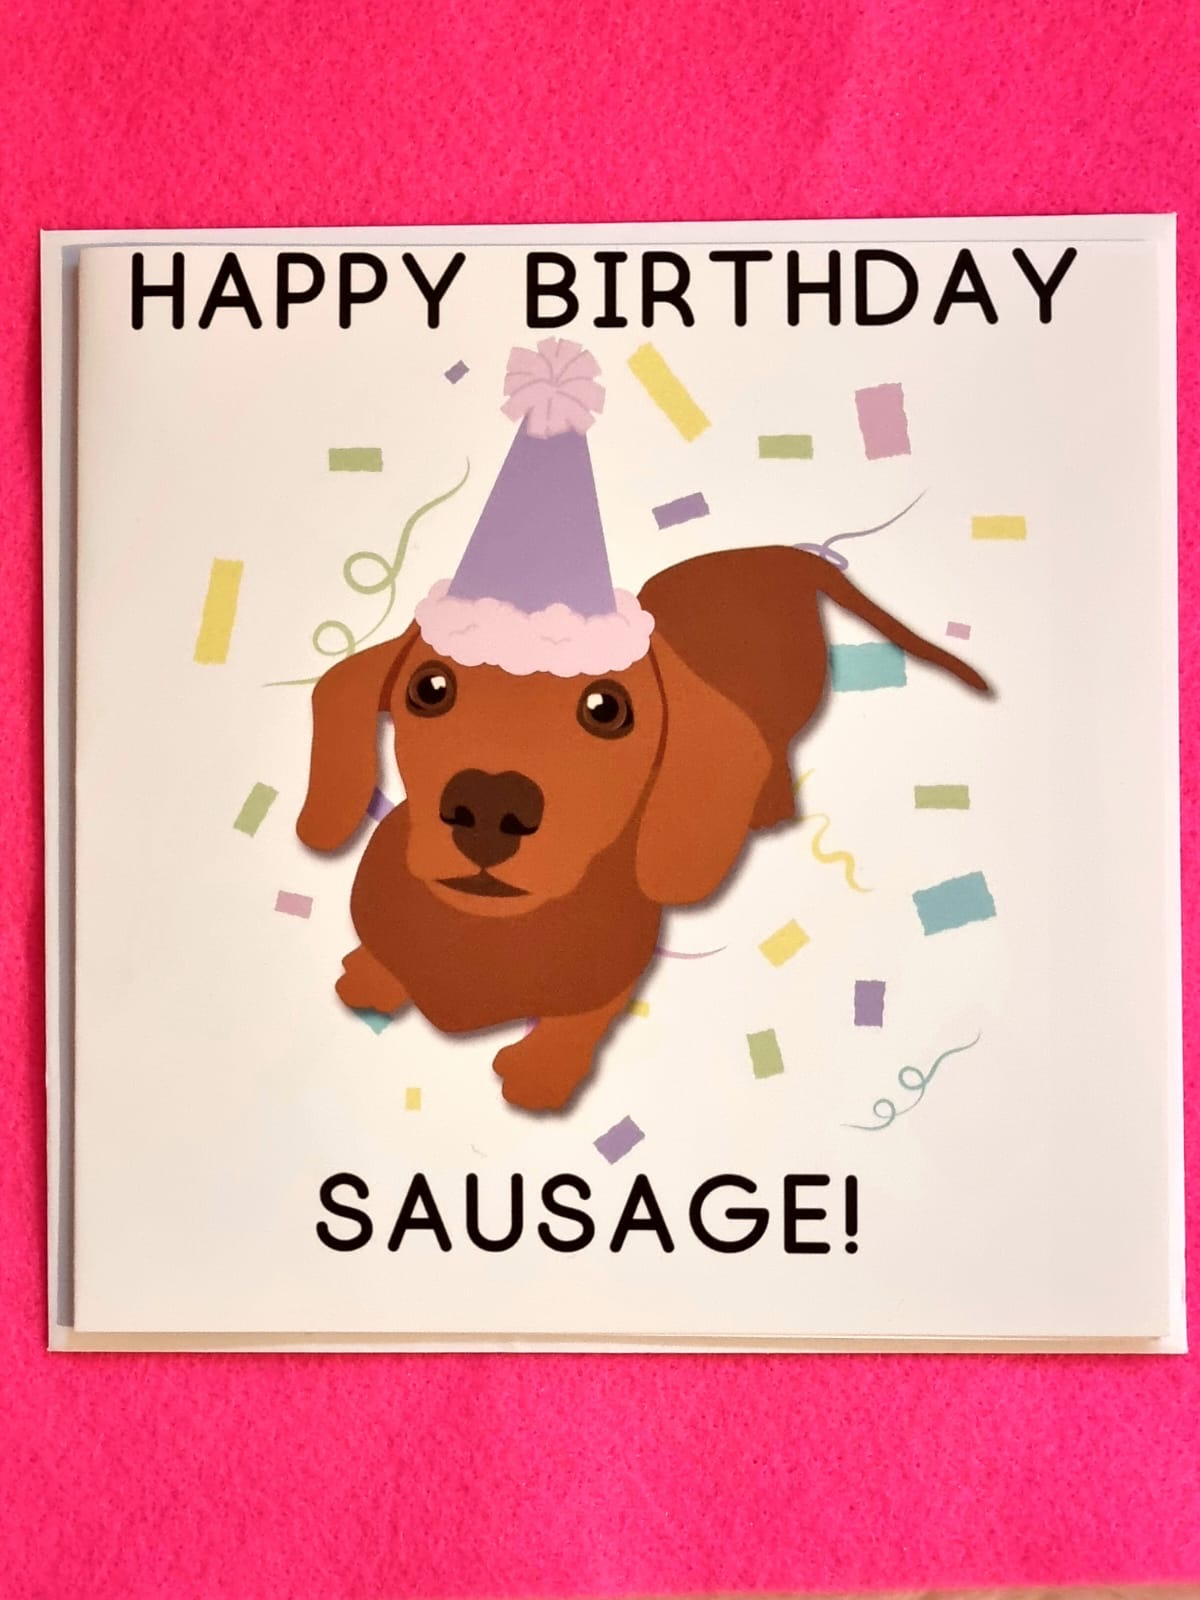 Happy Birthday Sausage! Dachshund Card